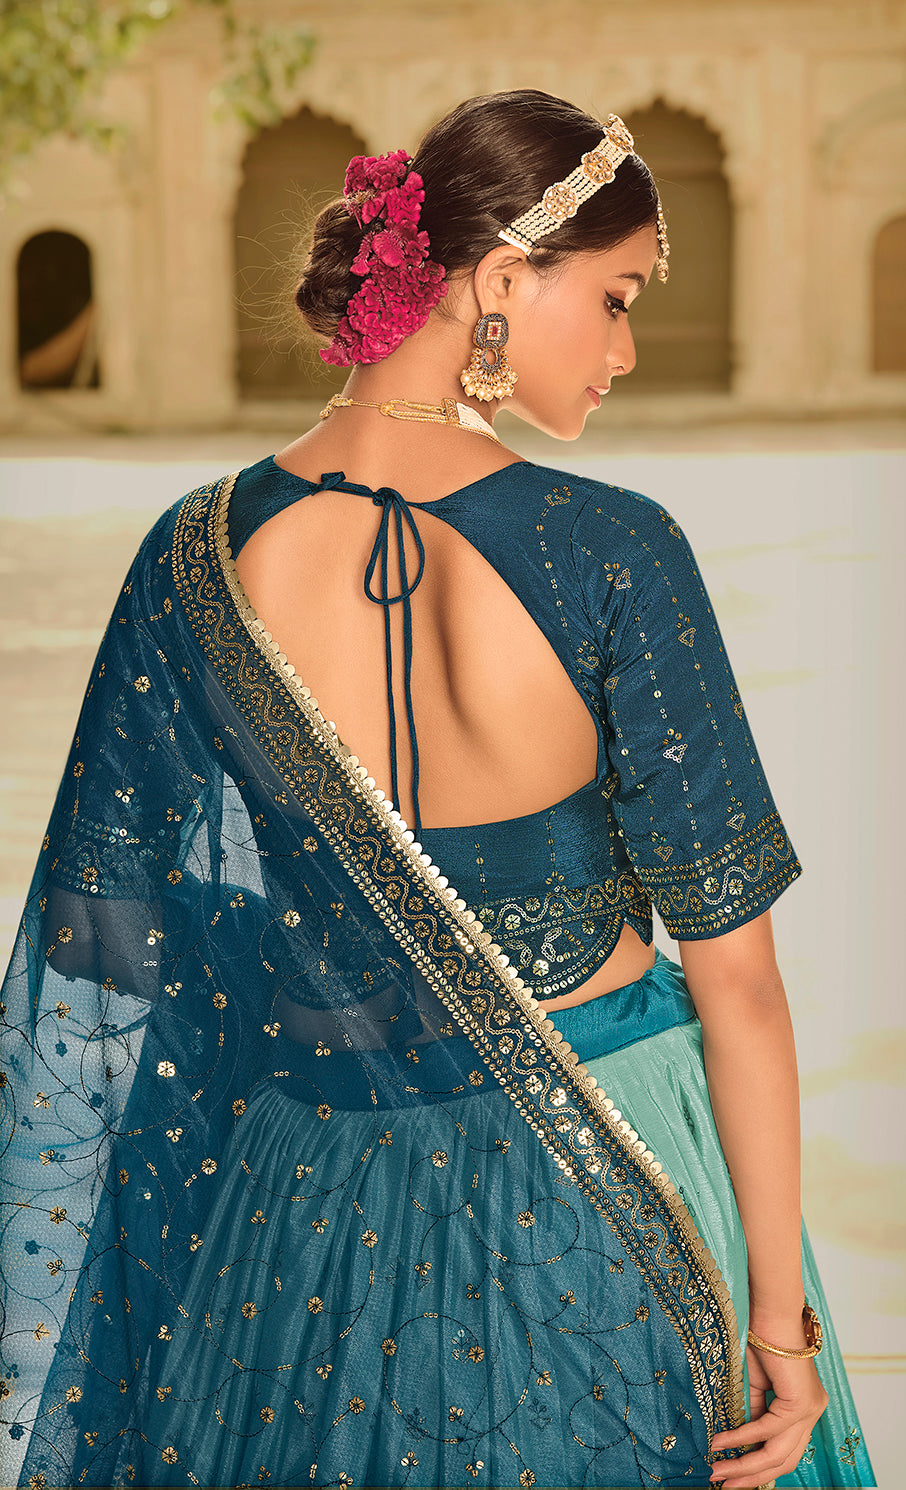 Photo of boat neck blouse | Wedding gowns online, Indian wedding photos,  Delhi wedding